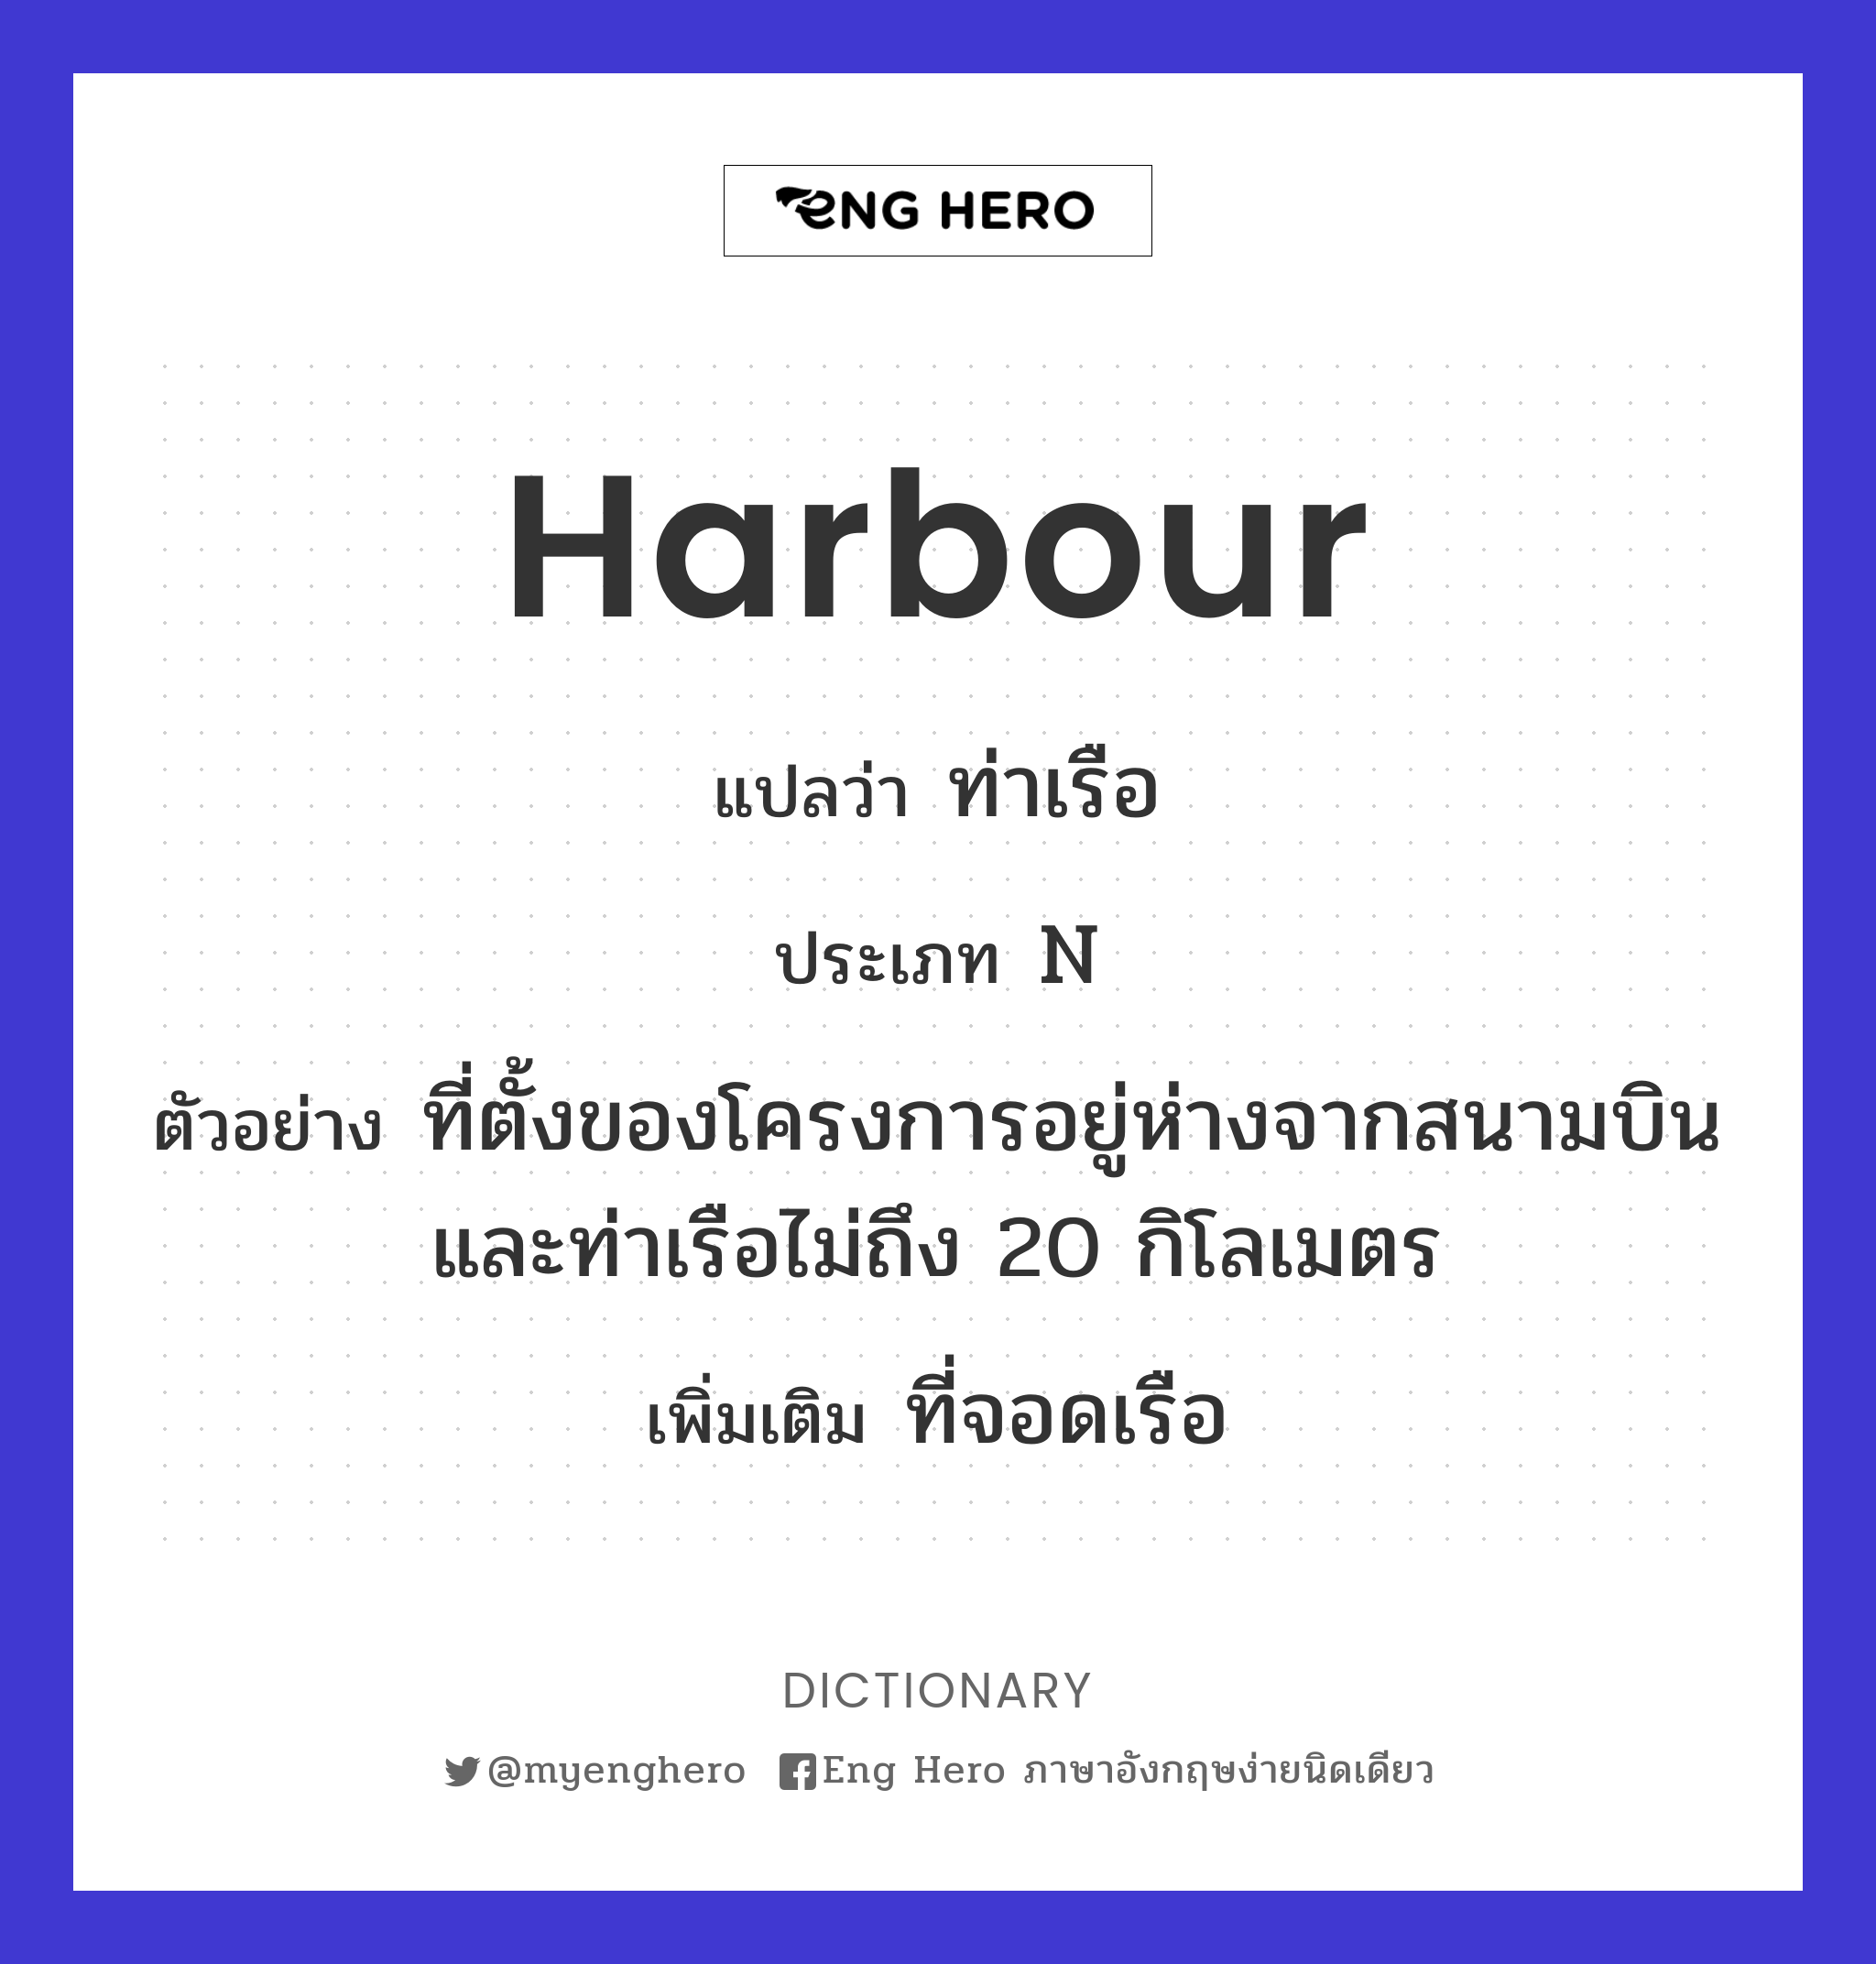 harbour